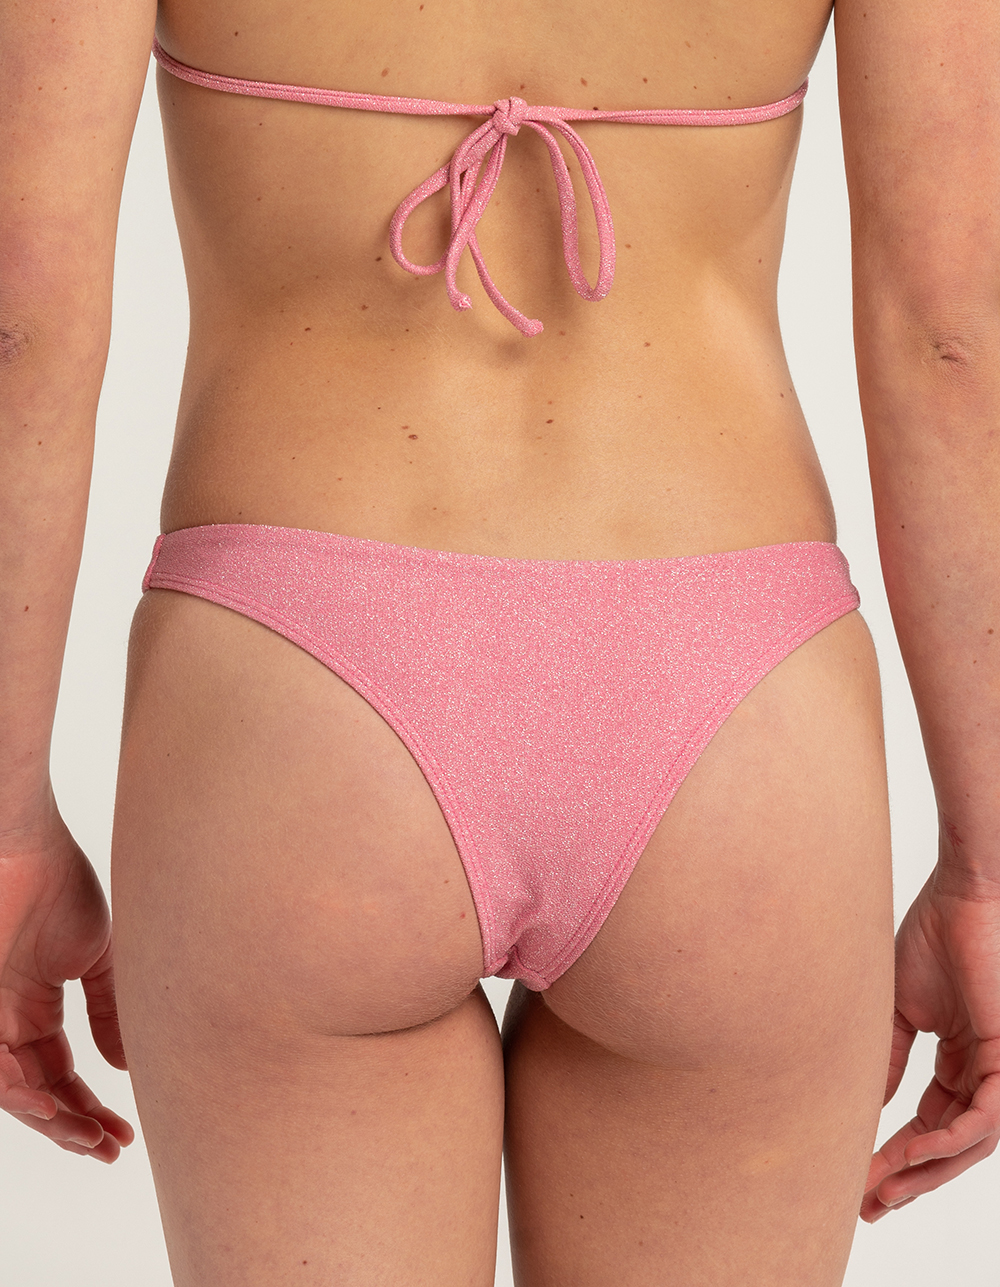 Rsq Skimpy Lurex Bikini Bottoms - Preppy Pink - X-Large